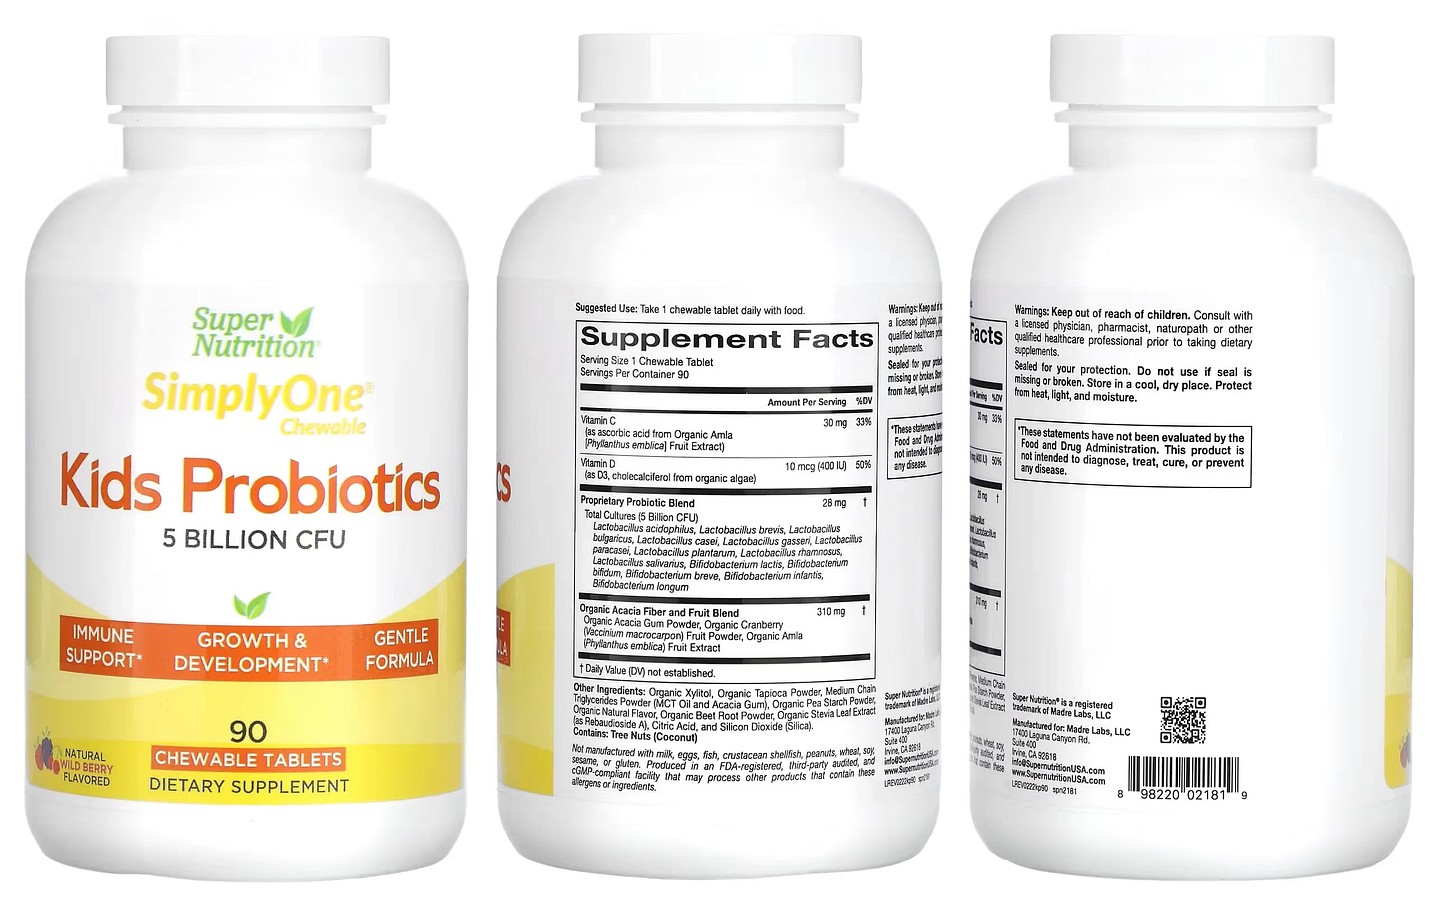 Super Nutrition, Kid’s Probiotics packaging